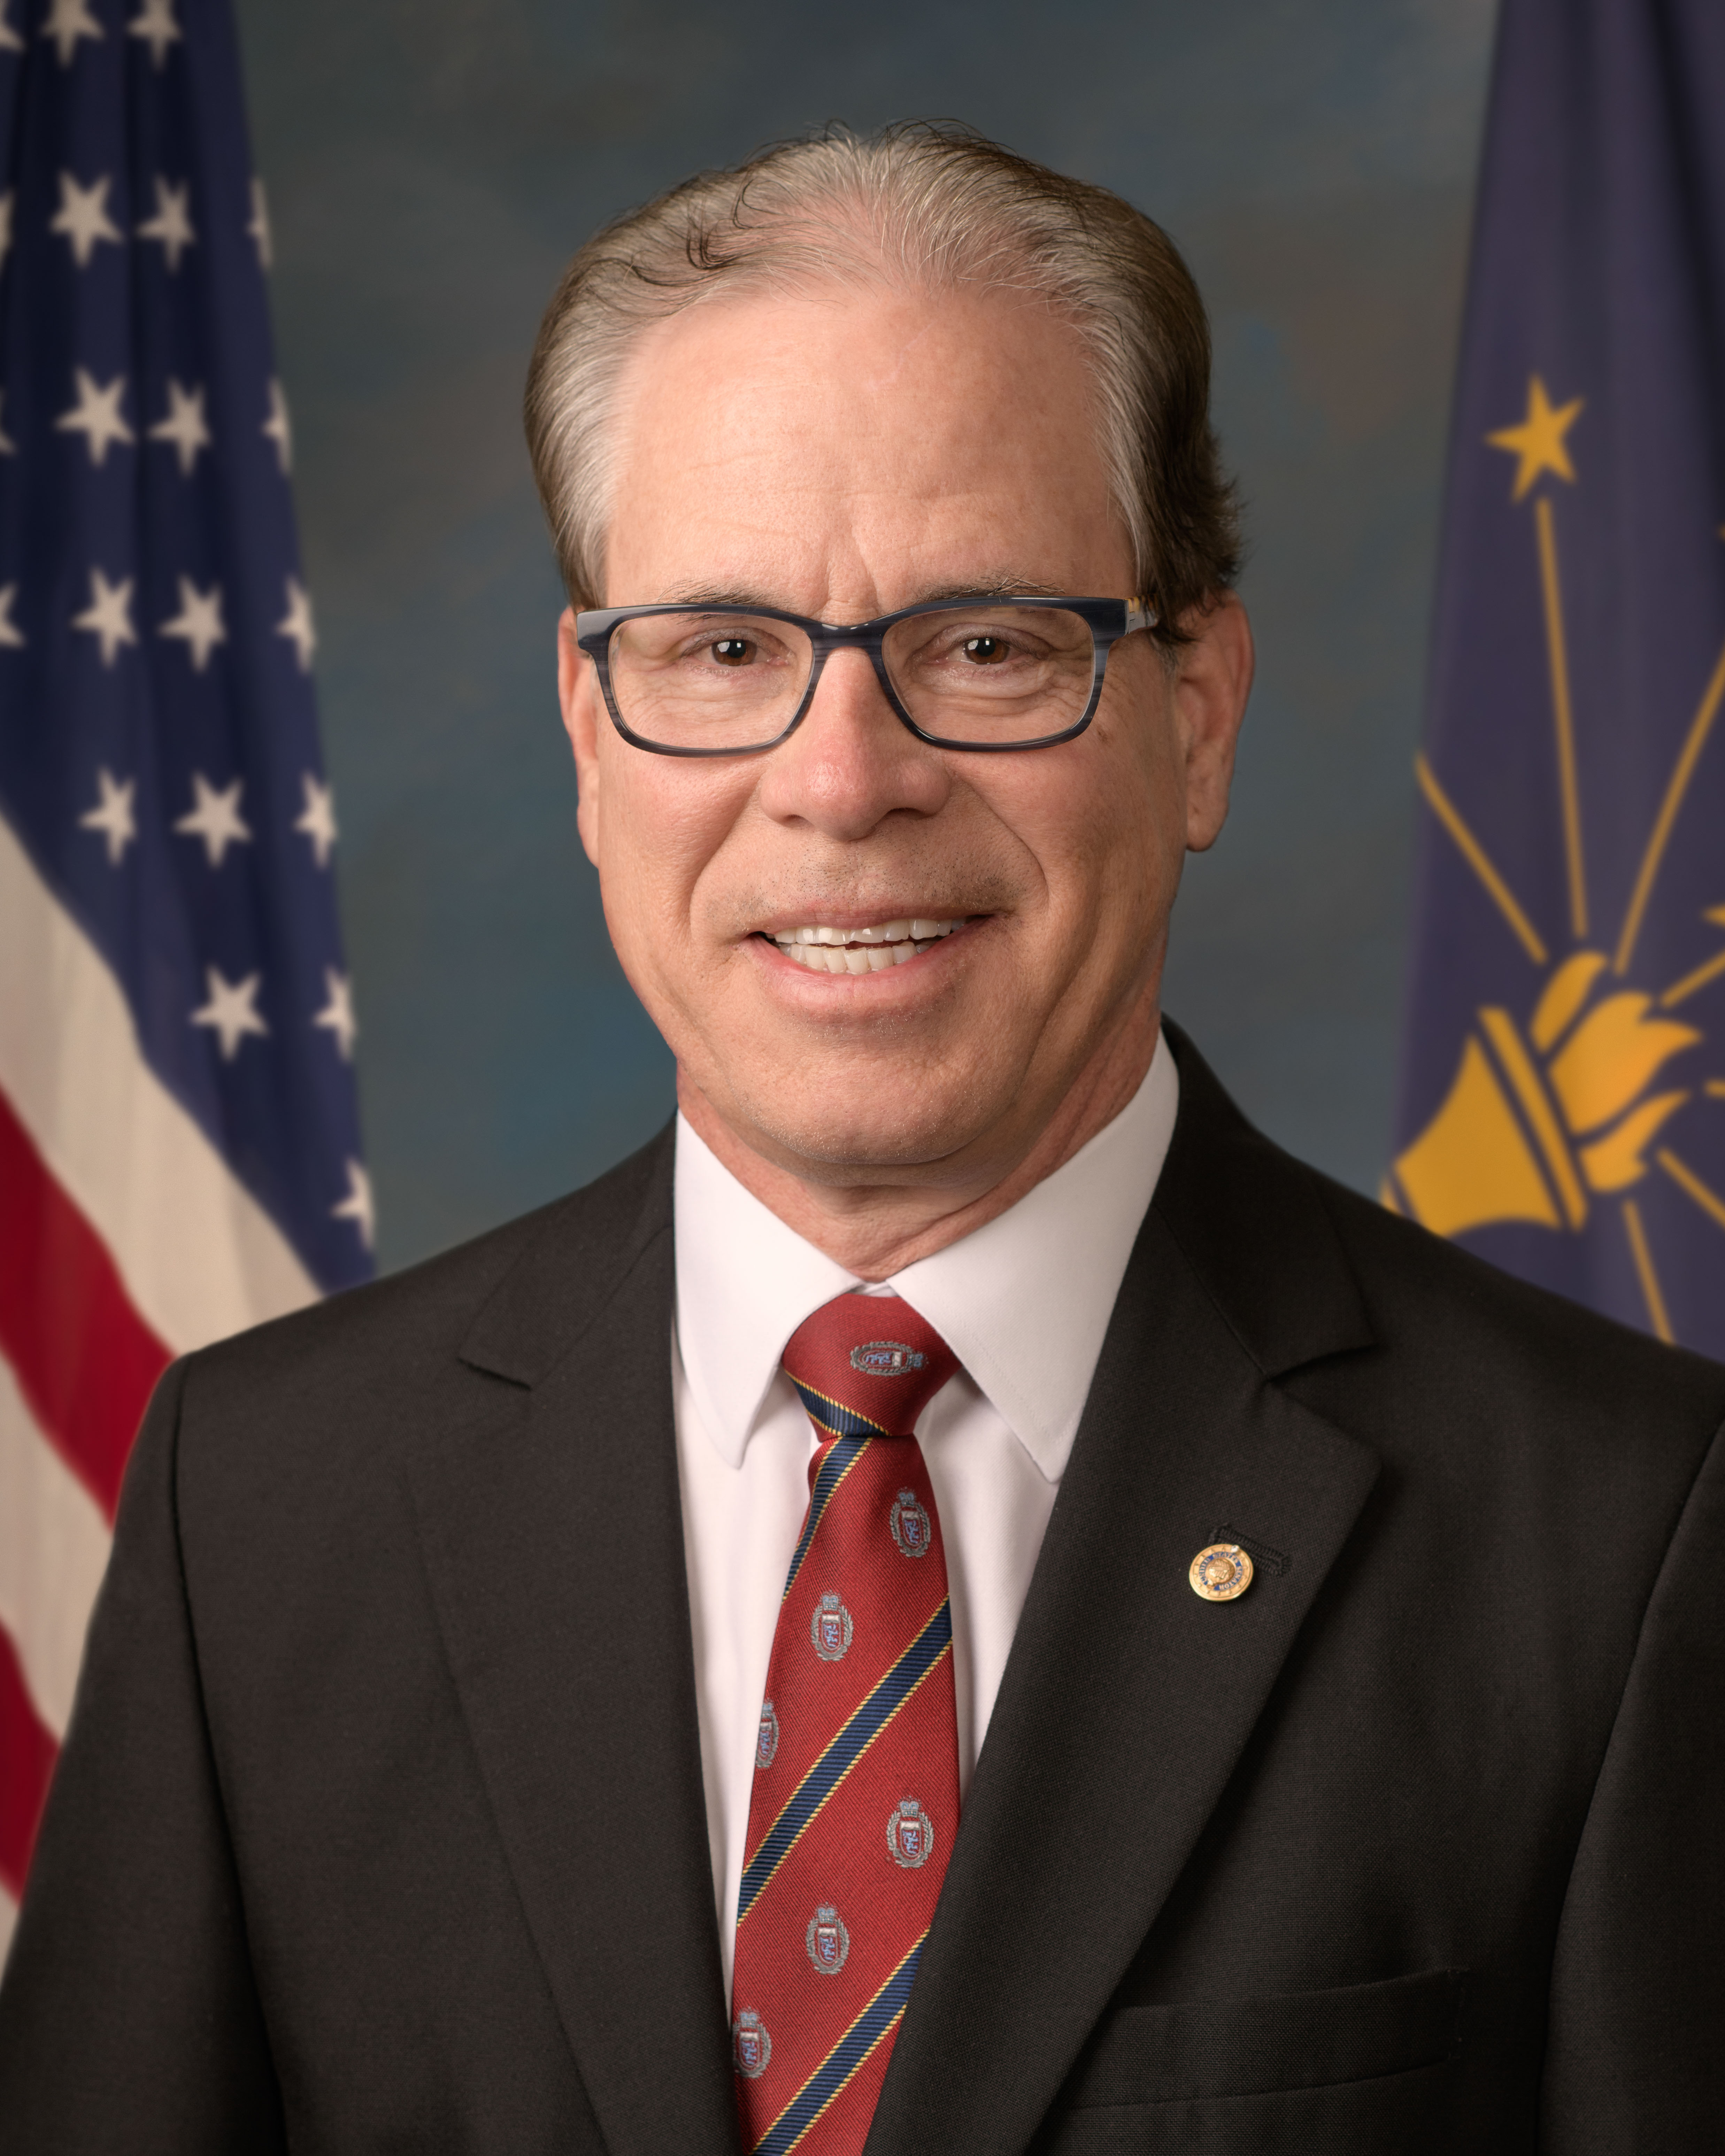 Senator Braun's Official Photo